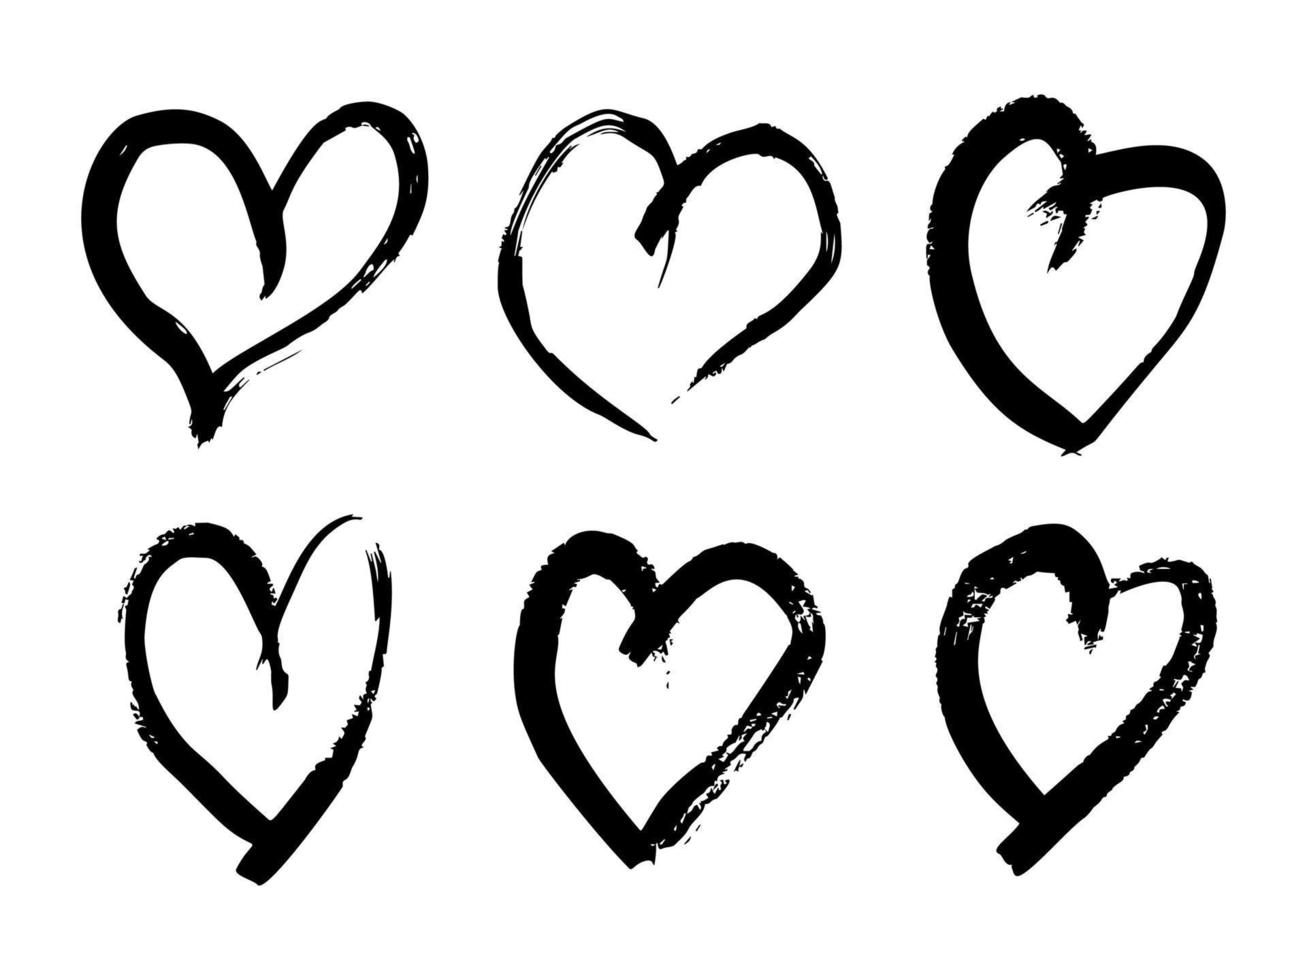 Hand drawn brush hearts. Set of six grunge black doodle hearts on white background. Romantic love symbol. Vector illustration.